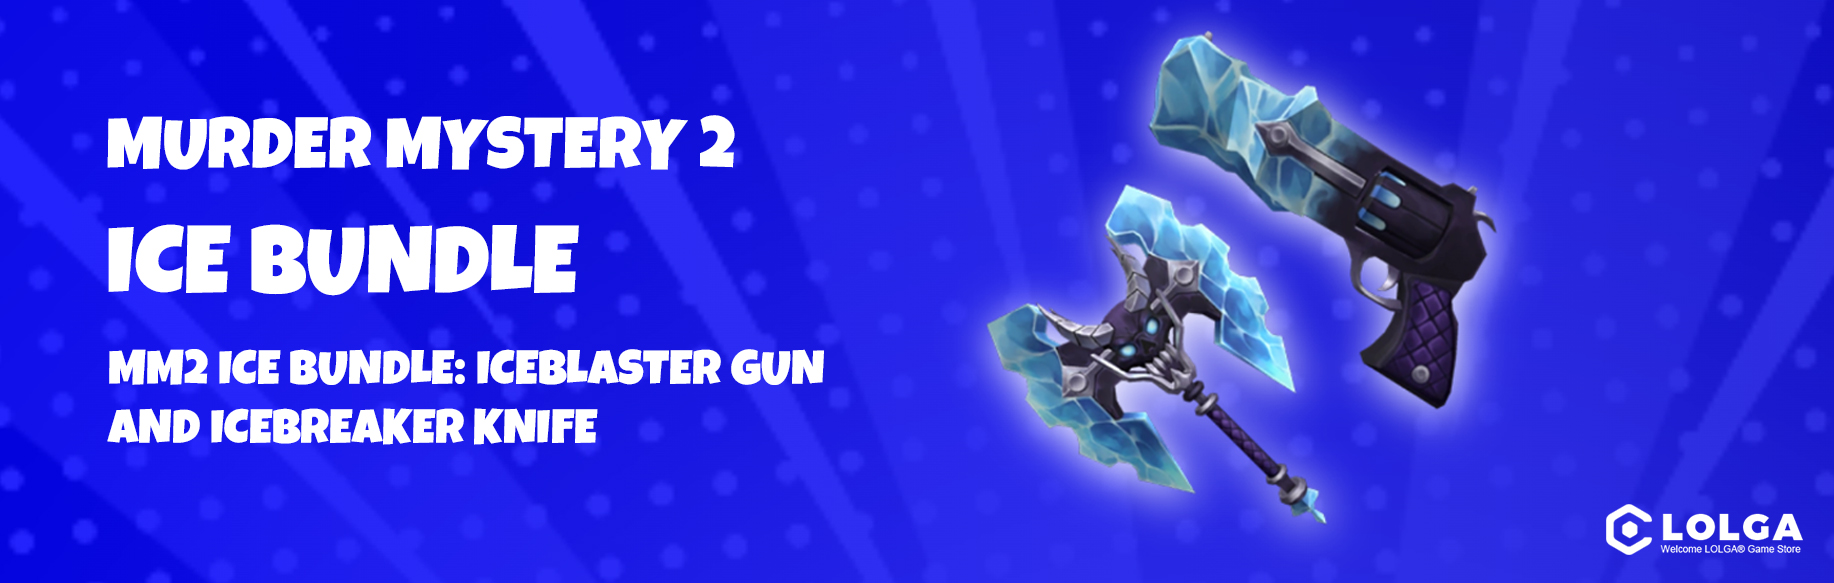 MM2 Ice Bundle: Iceblaster Gun and Icebreaker Knife